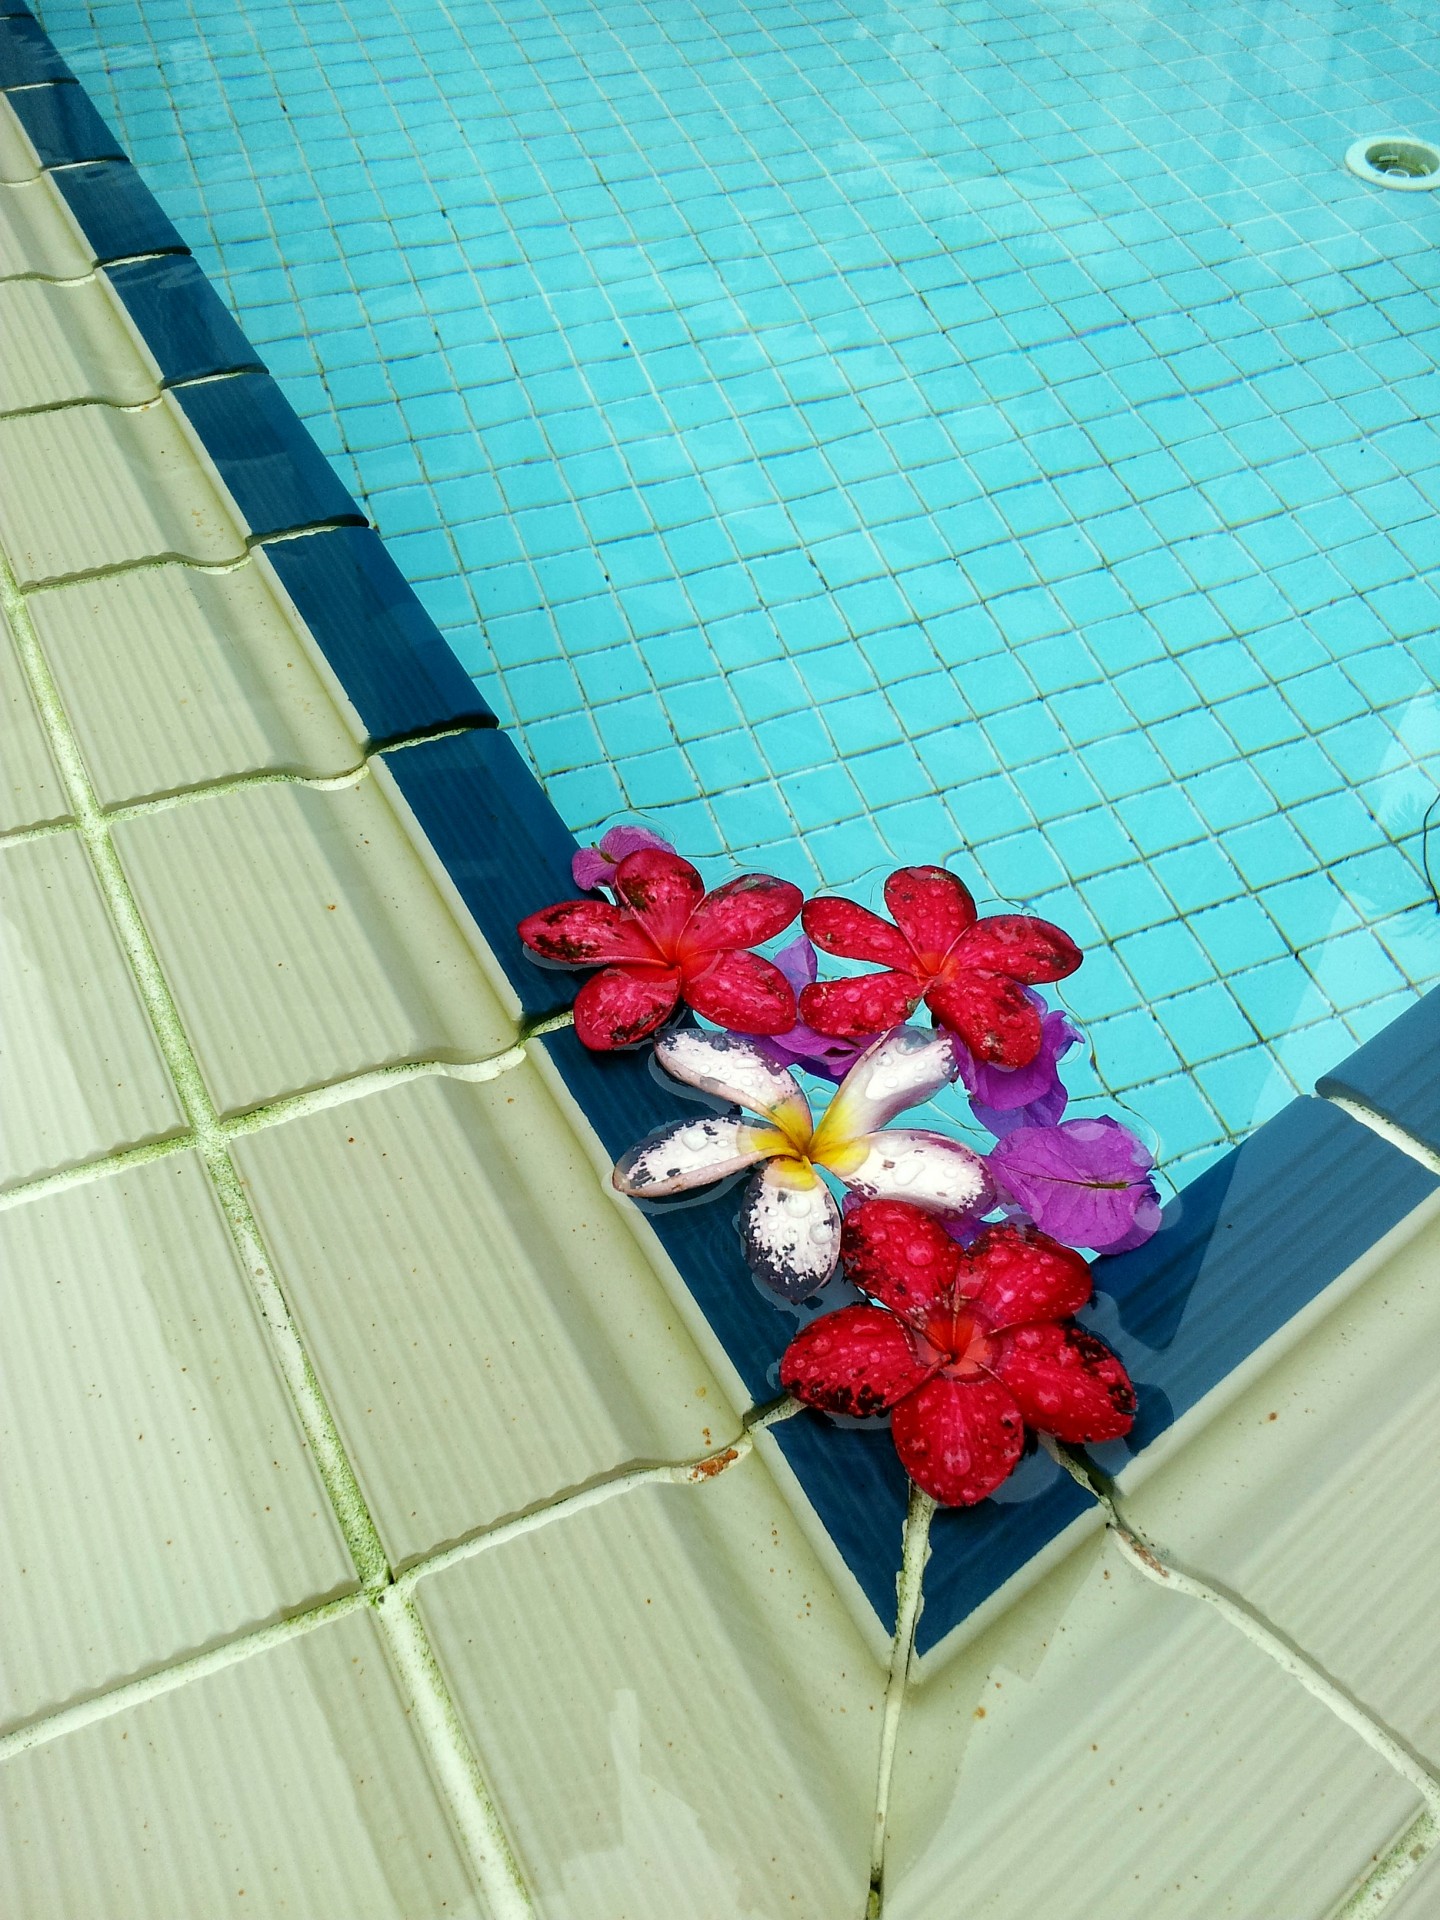 fallen flower swimming pool fallen flower on the swimming pool free photo